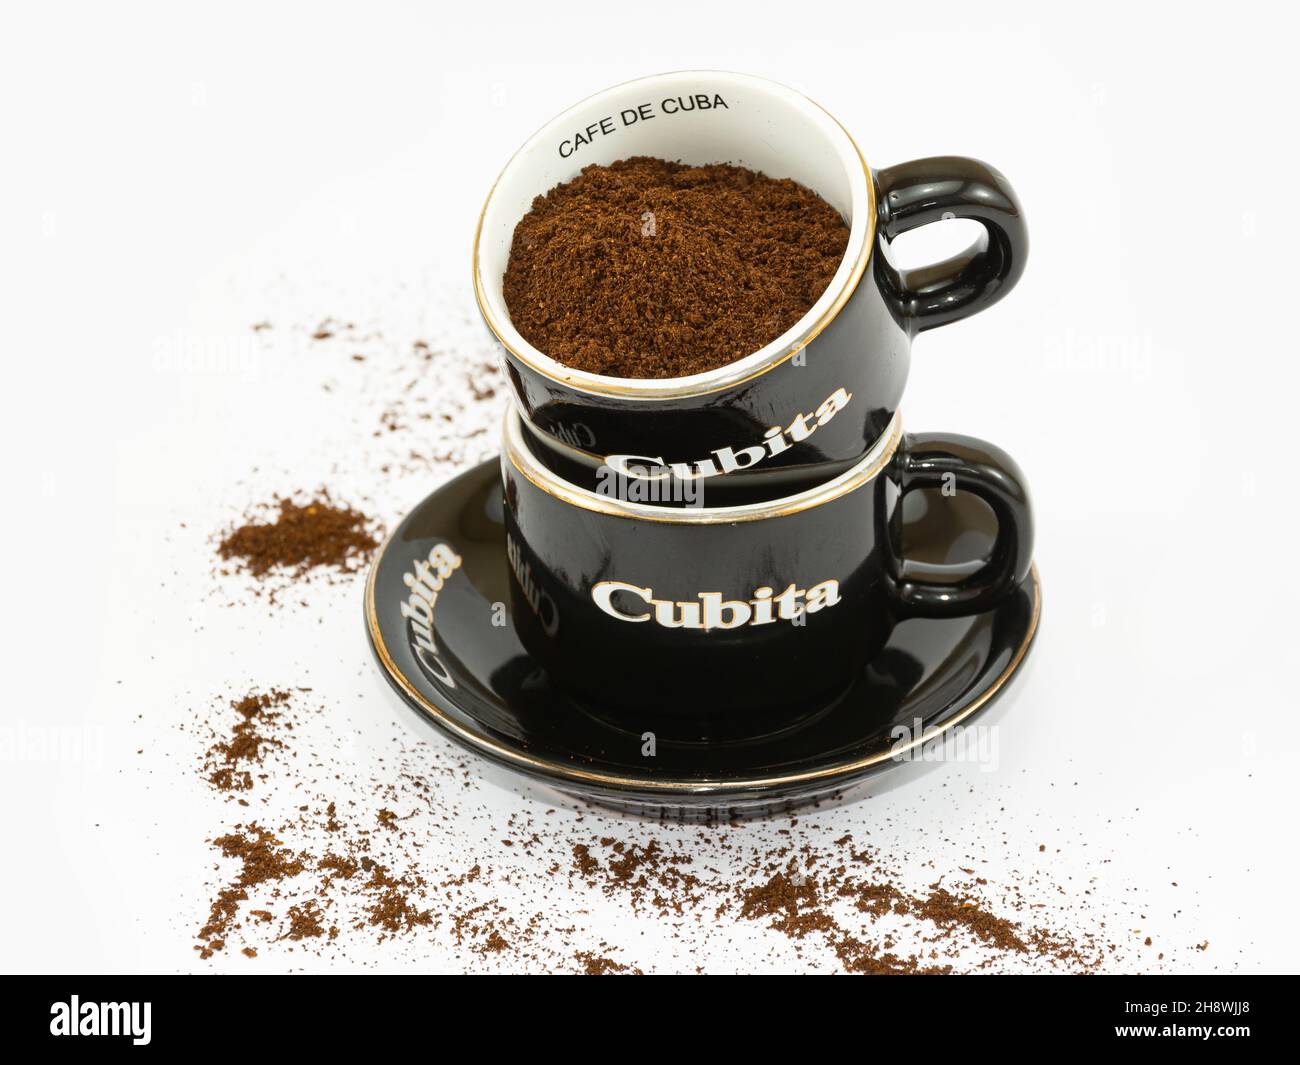 https://c8.alamy.com/comp/2H8WJJ8/matanzas-cuba-oct-22-2021-a-closeup-shot-of-cuban-coffee-in-a-cup-on-a-white-background-2H8WJJ8.jpg